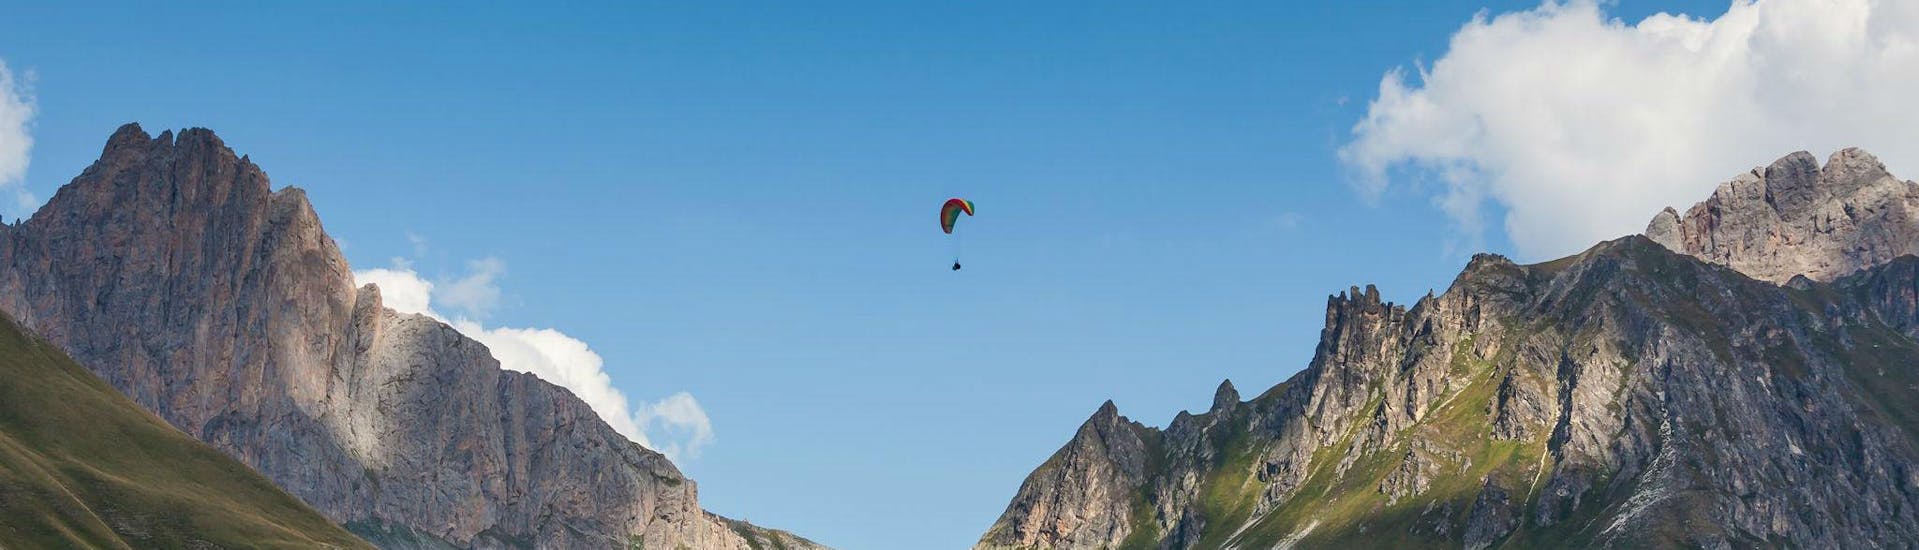 Acrobatisch tandemparagliden in Valloire (vanaf 7 j.) - Col du Galibier.